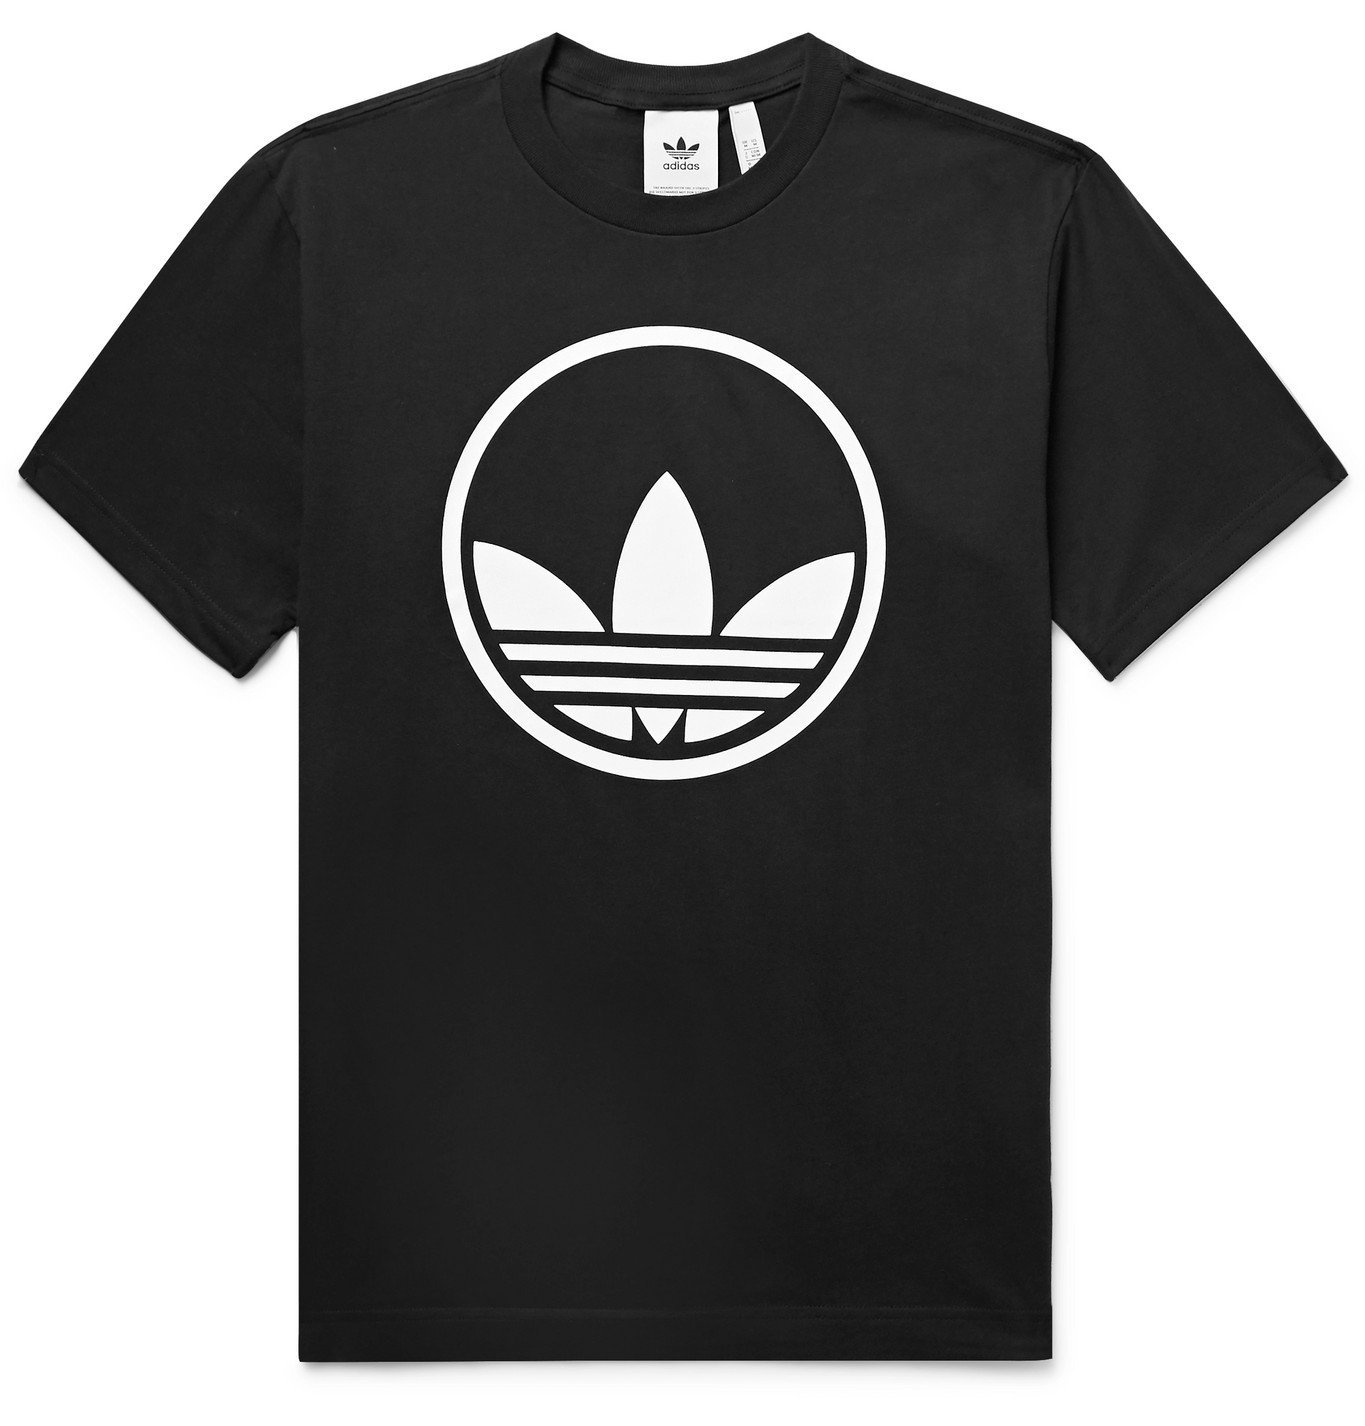 ADIDAS ORIGINALS - Logo-Print Cotton-Jersey T-Shirt - Black adidas ...